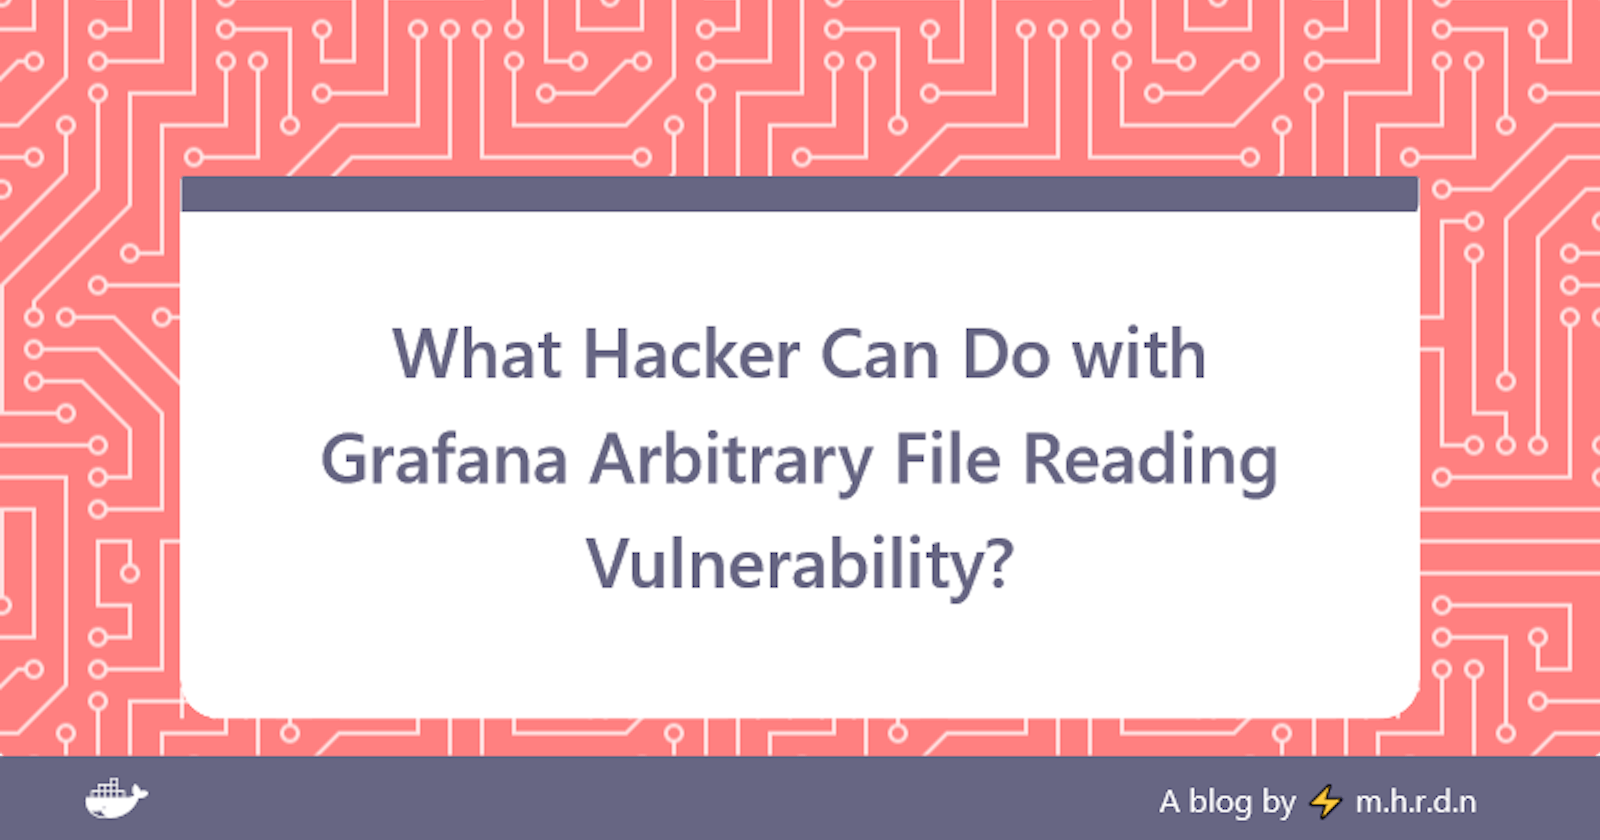 What Hacker Can Do with Grafana 8.x Arbitrary File Reading Vulnerability?